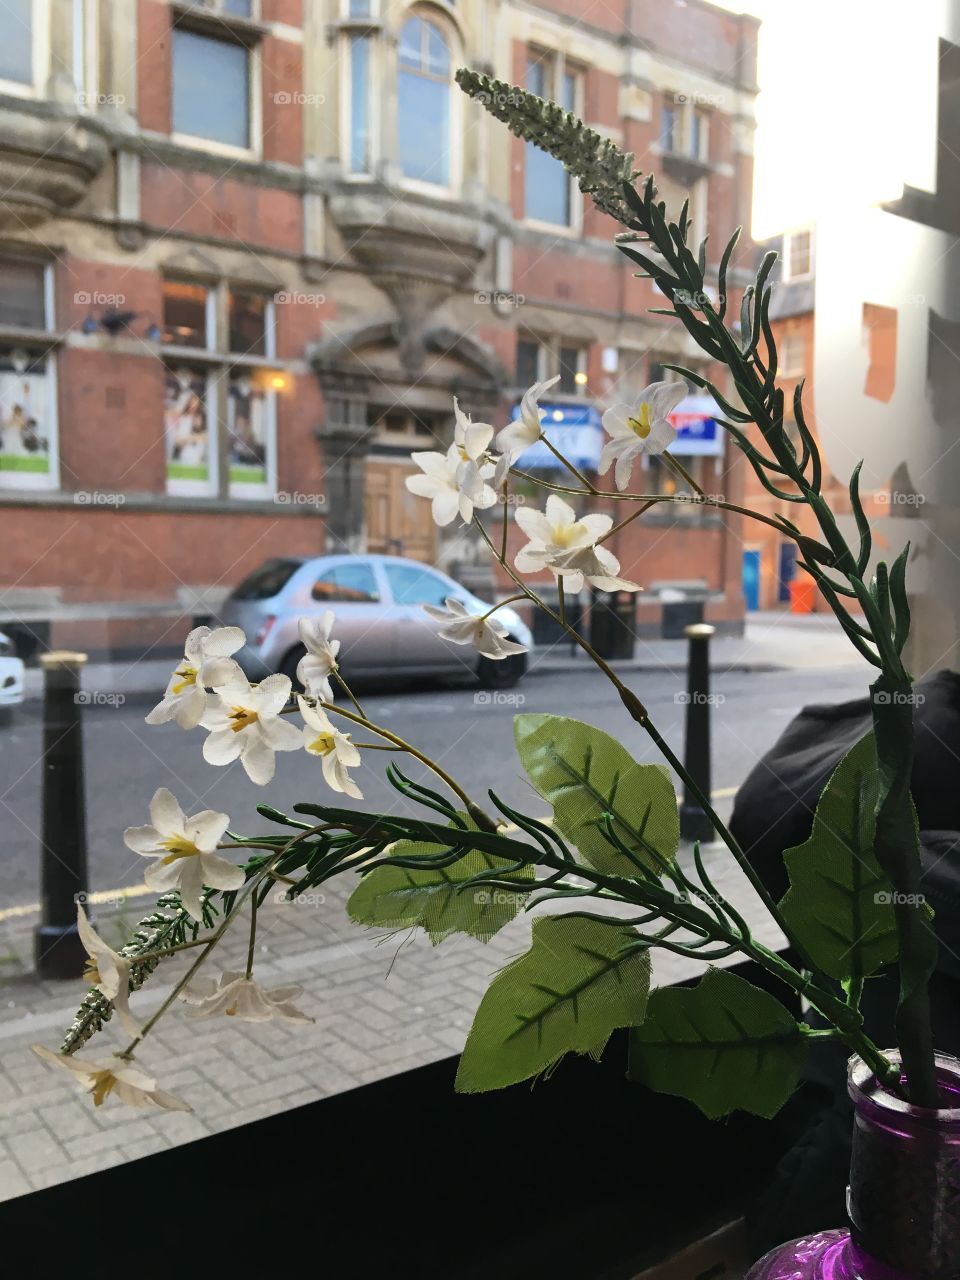 City flowers on window 